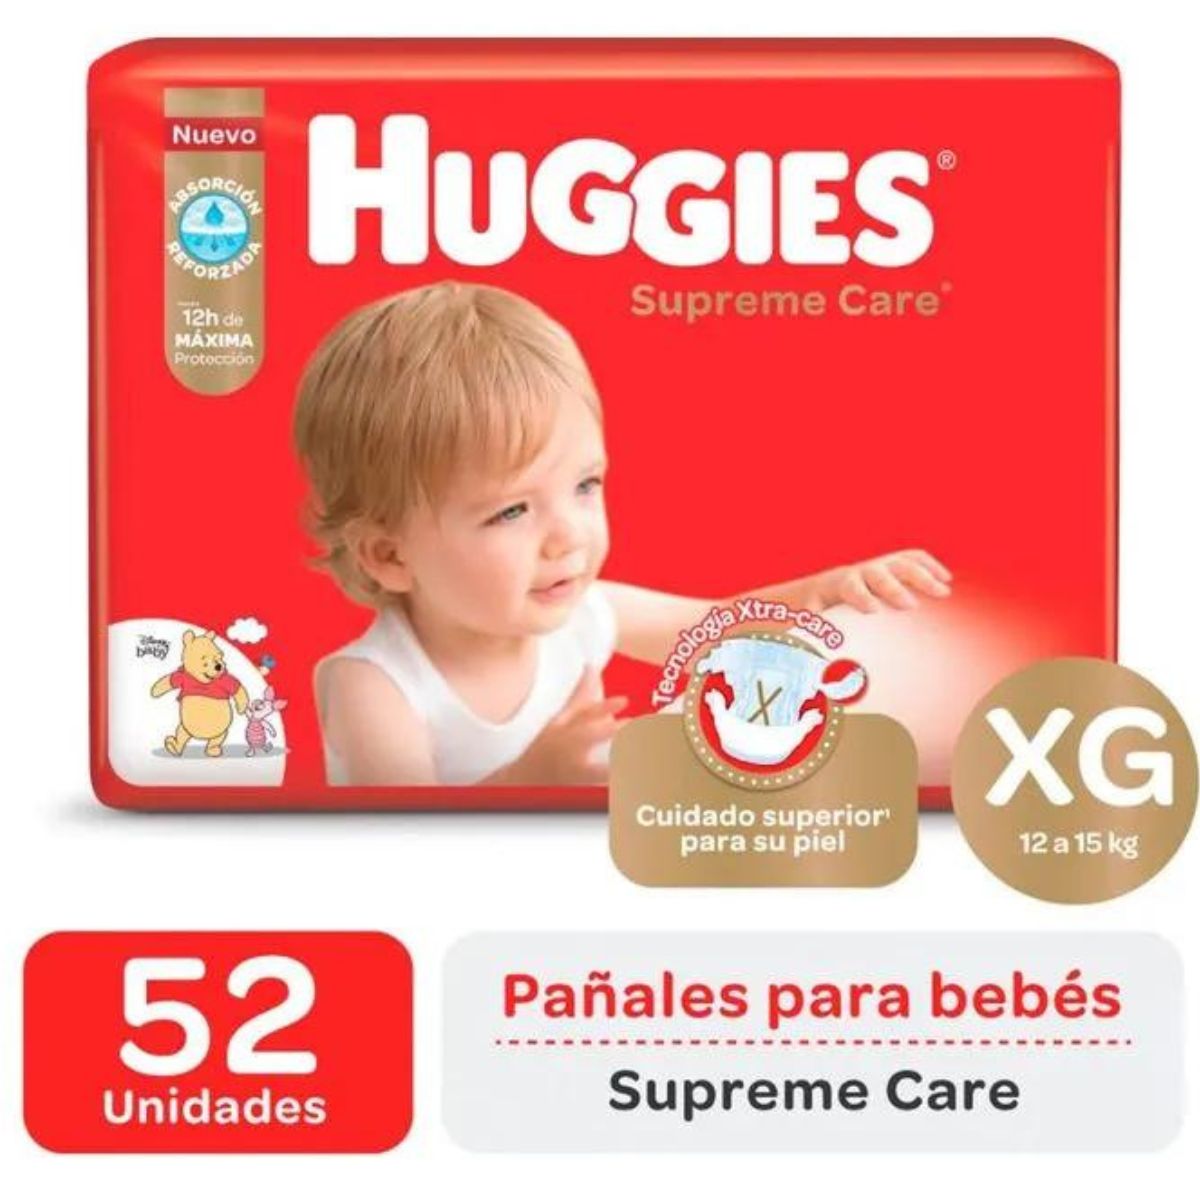 Imagen 1 de 2 de Pañales Huggies Supreme Care XG x52 unidades